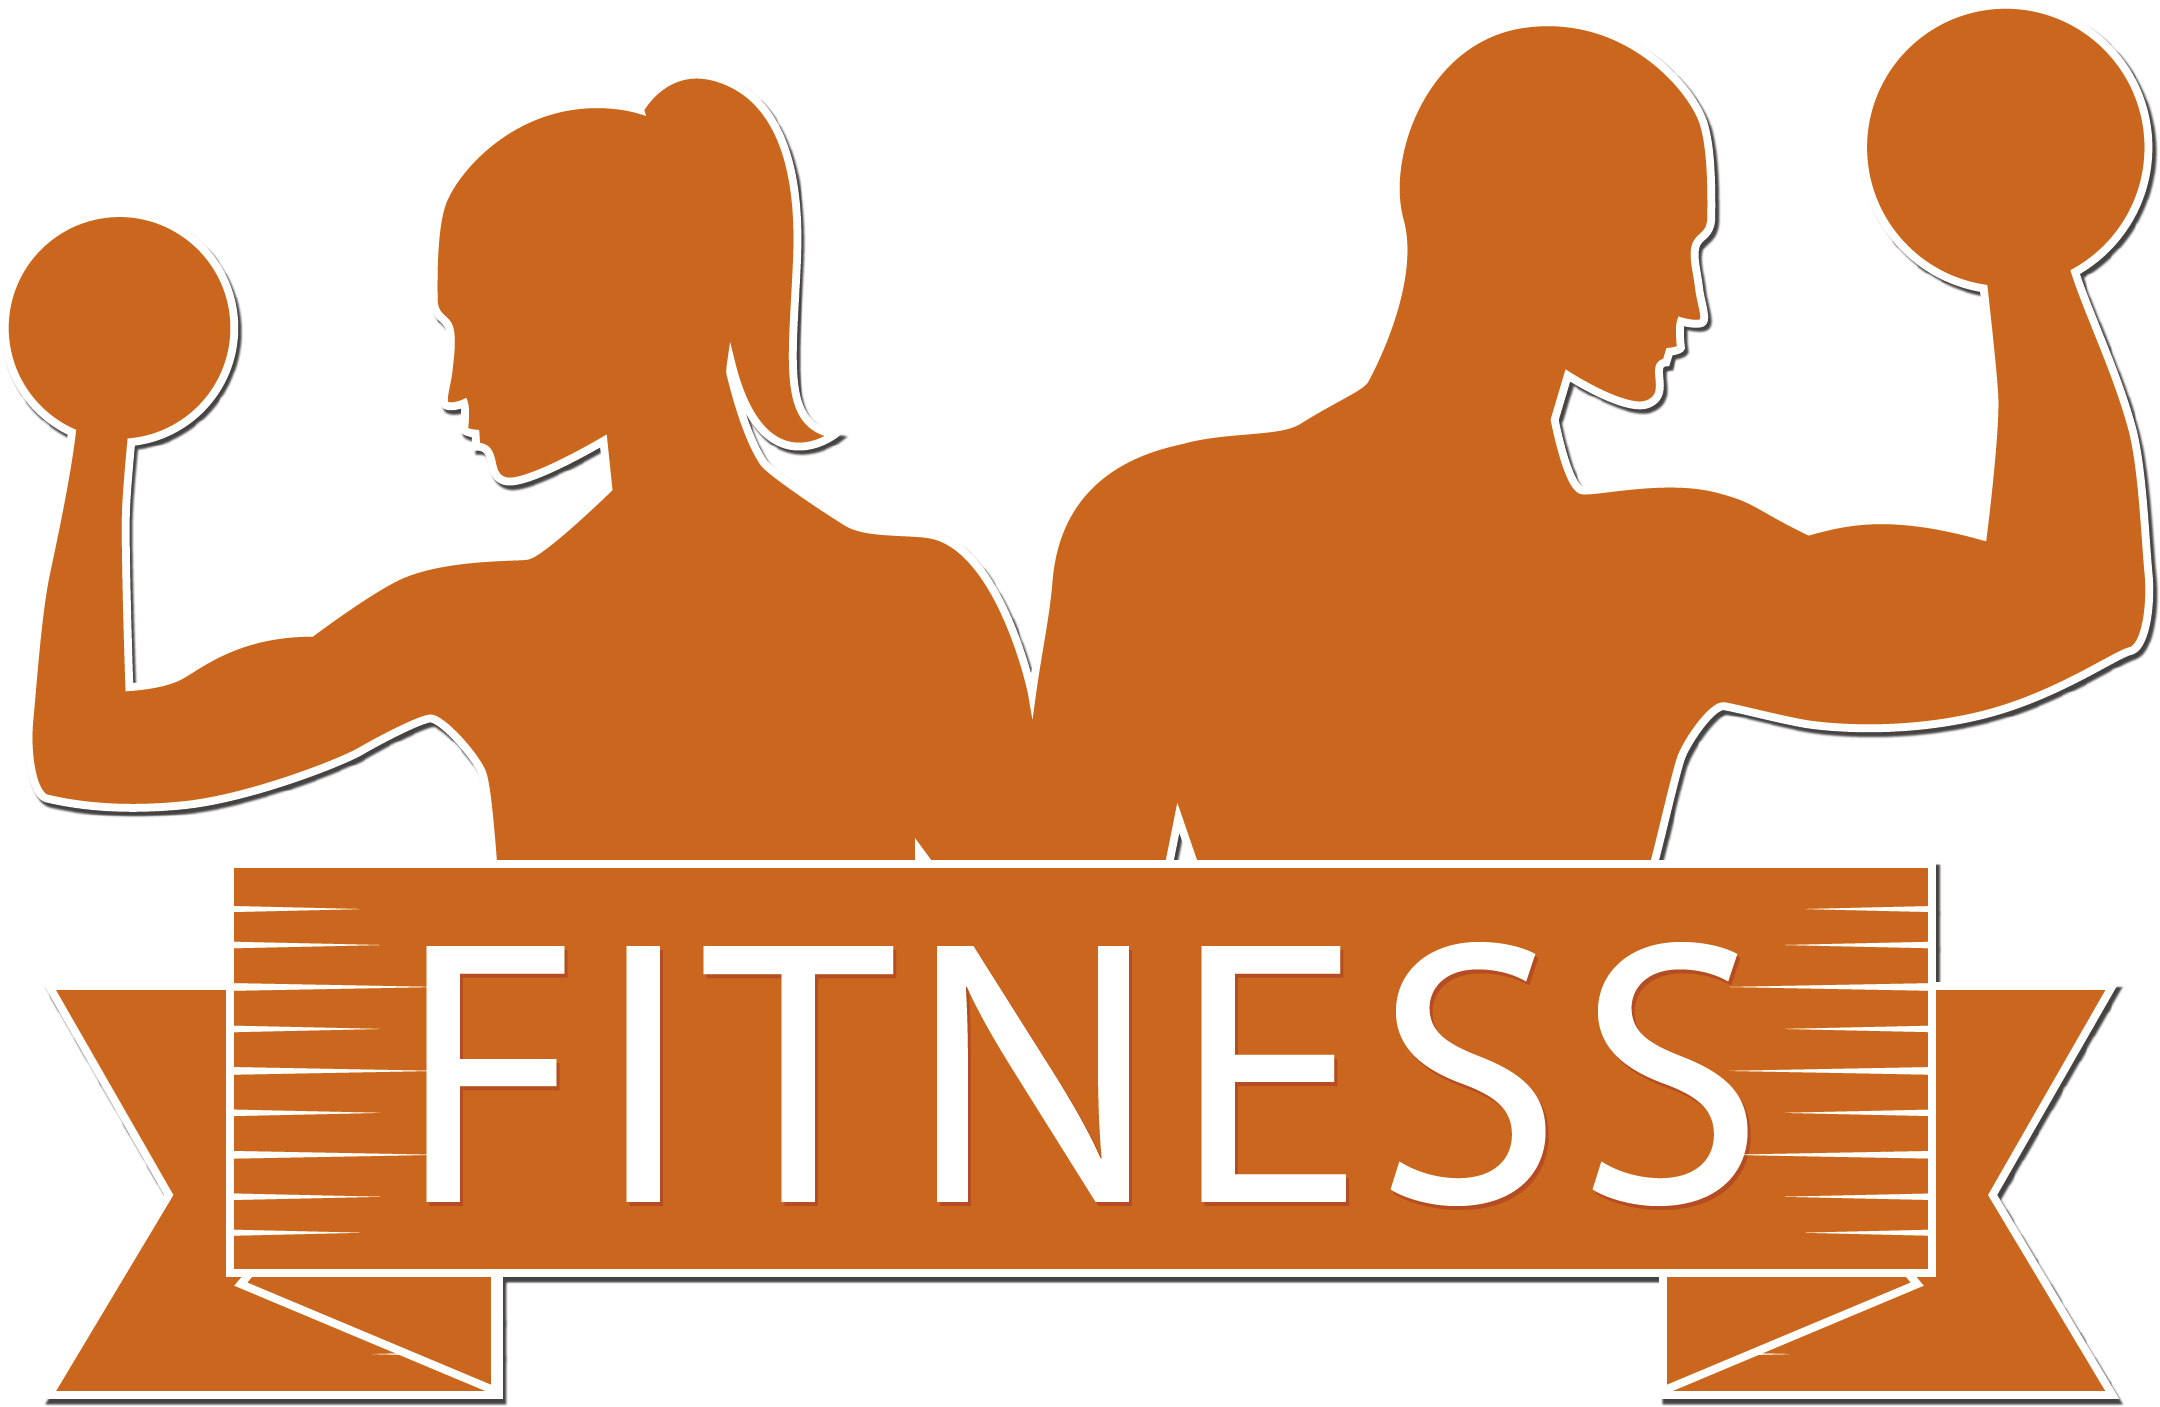 https://freepngimg.com/thumb/fitness/144488-logo-vector-fitness-free-clipart-hd.png